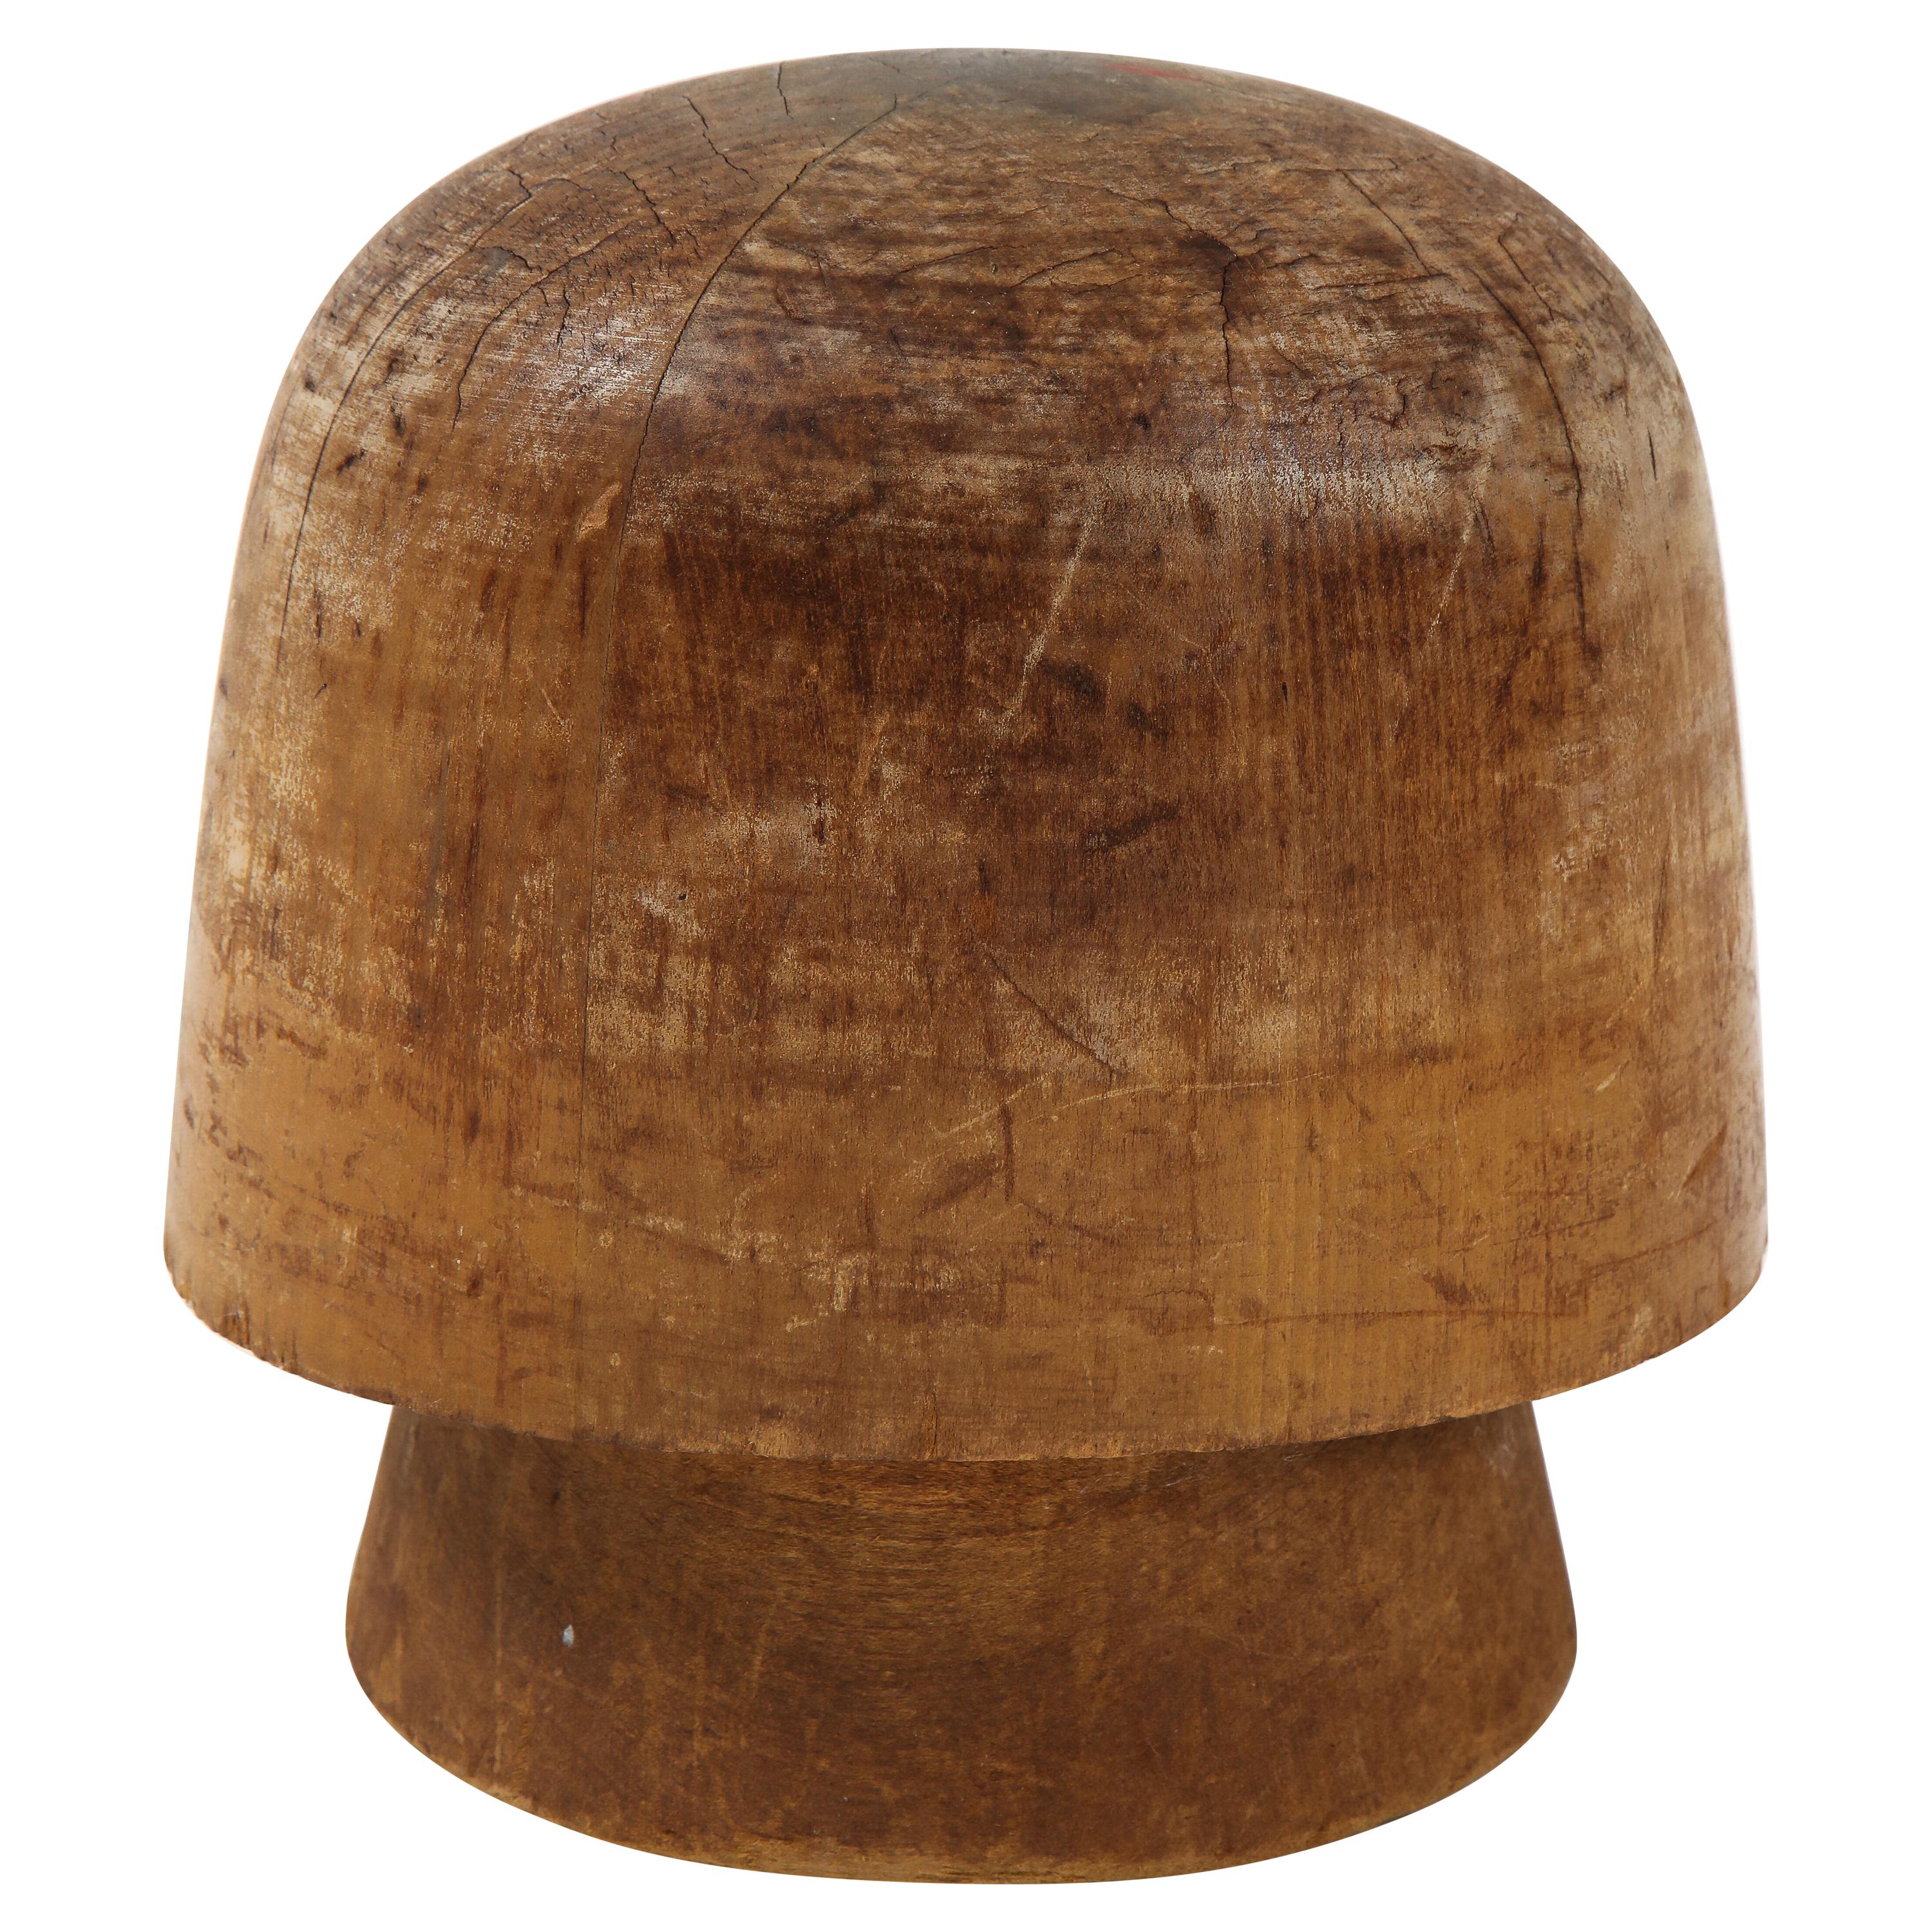 Art Deco Wooden Hat Form